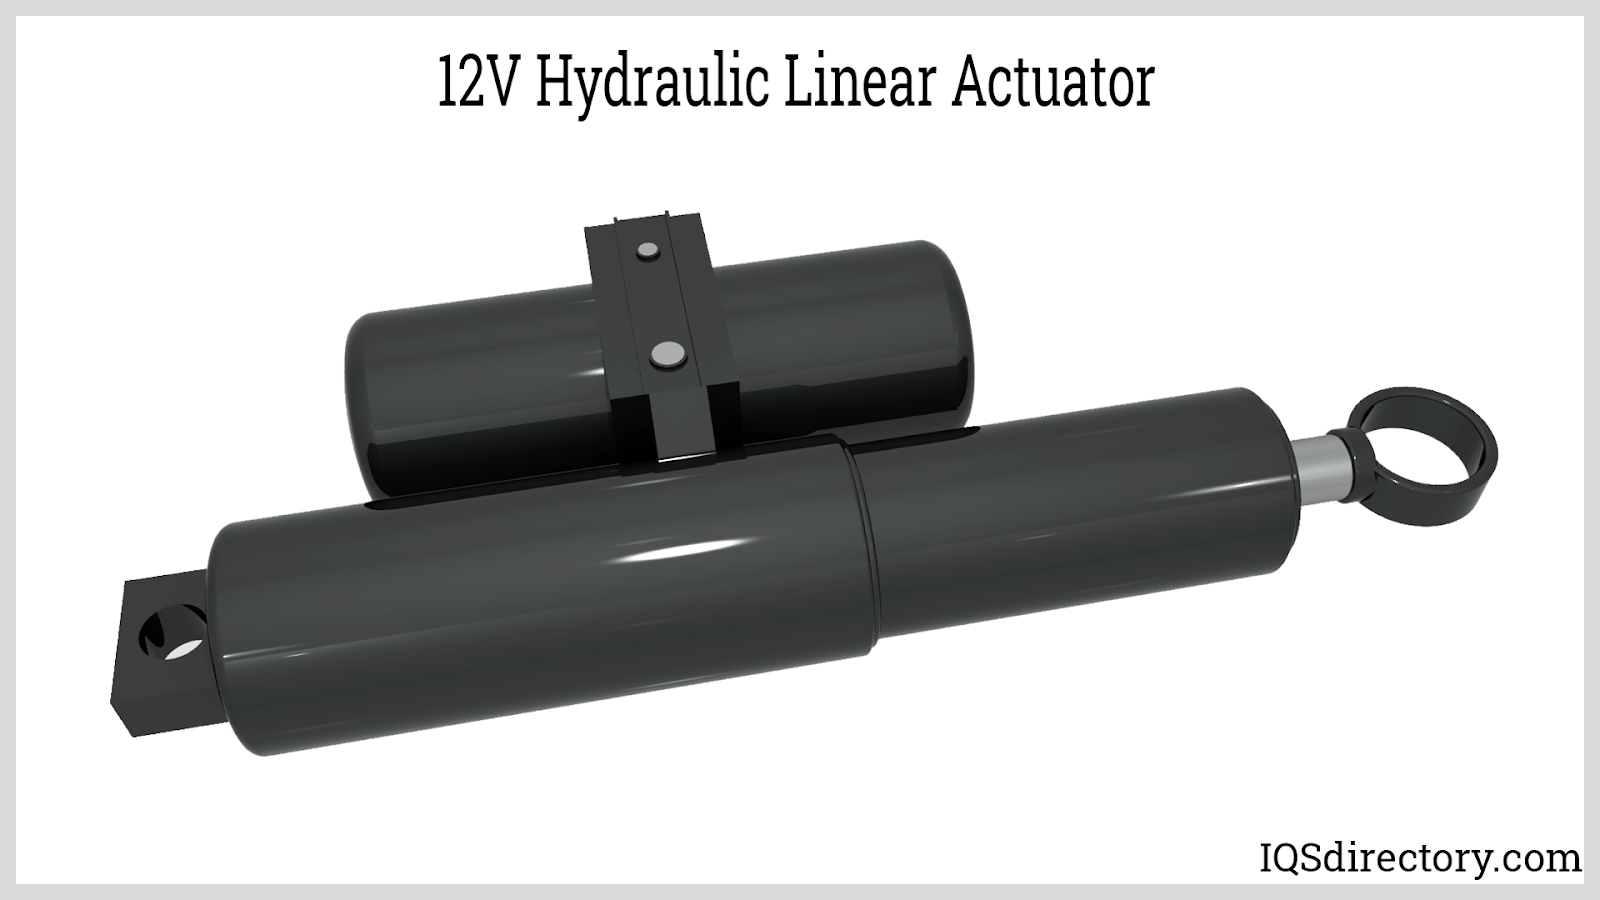 12V Hydraulic Linear Actuator